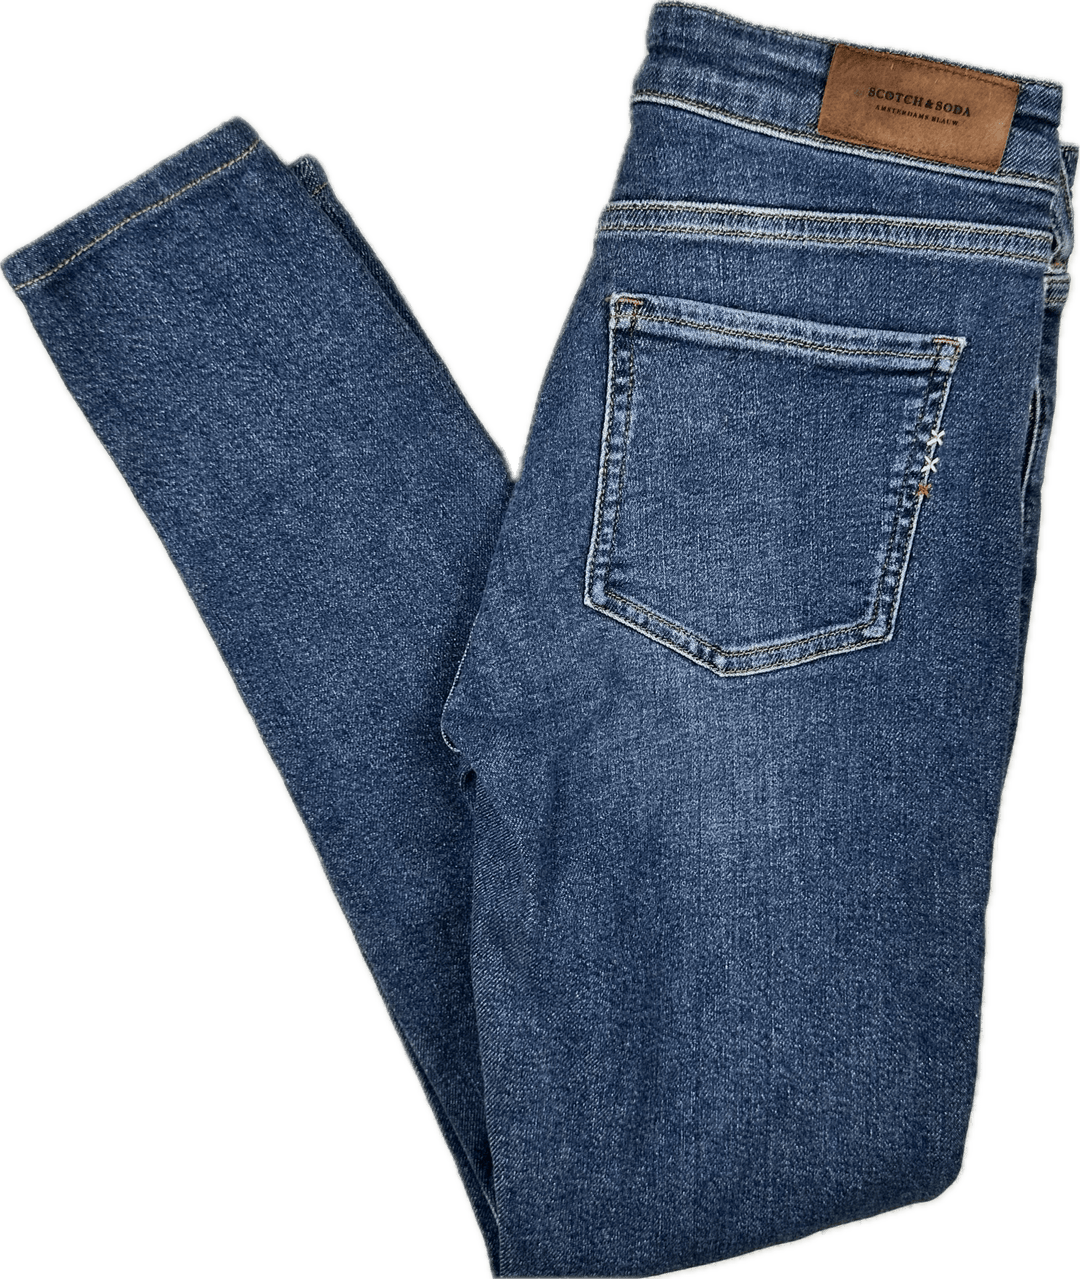 Scotch & Soda 'La Bohemienne' Mid Rise Skinny Jeans - Size 27 - Jean Pool